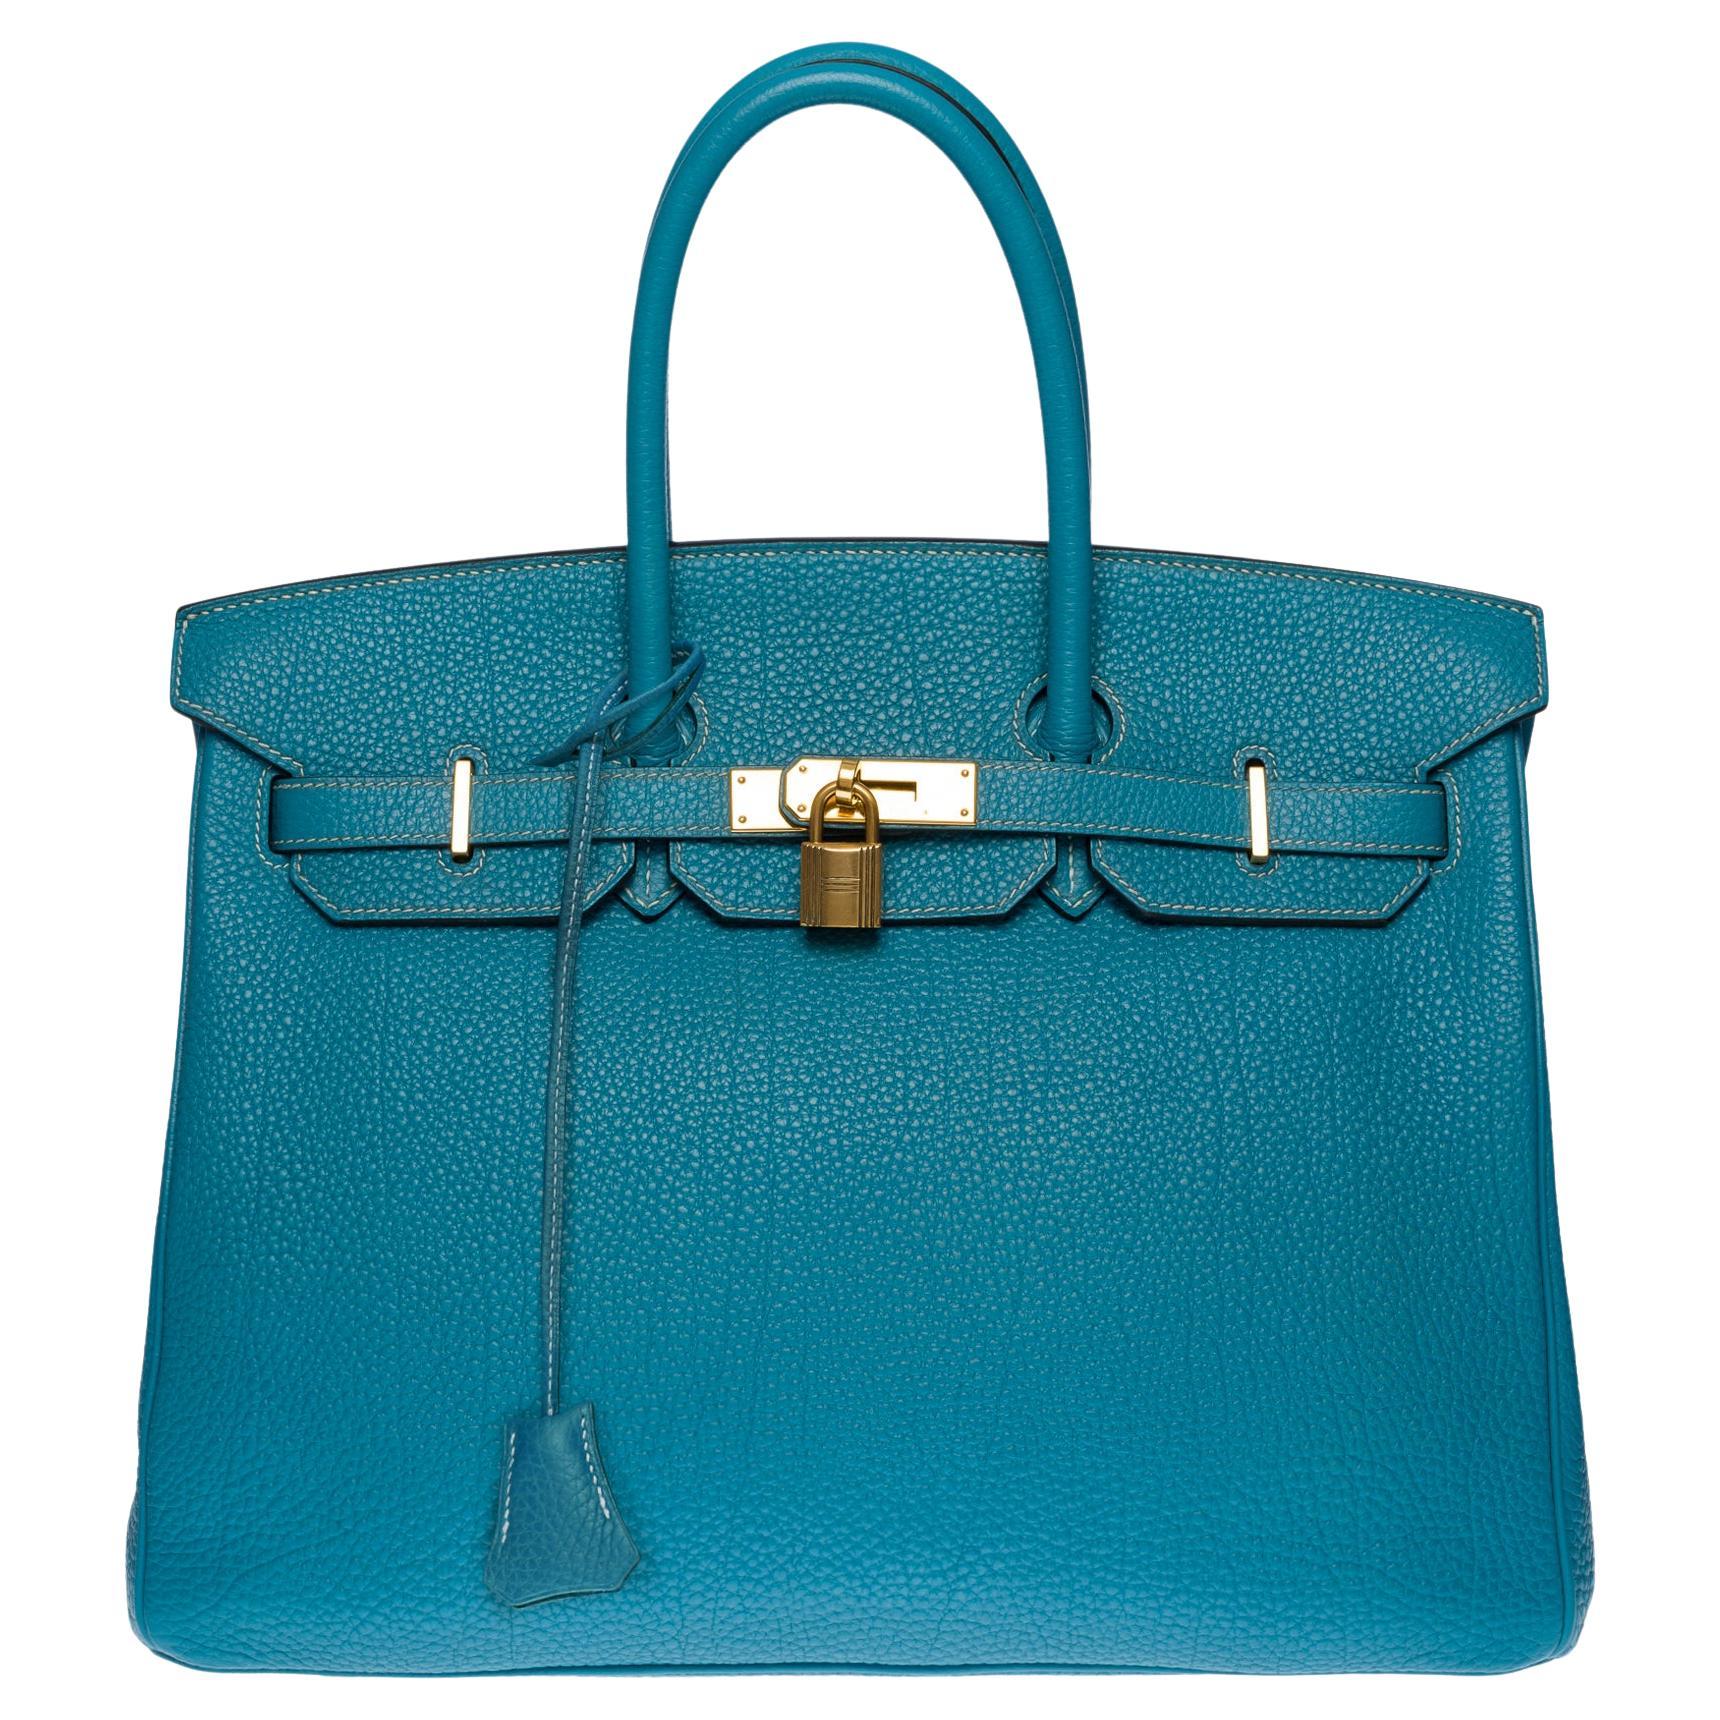 Magnificent Hermès Birkin 35 handbag in Bleu Saint-Cyr Togo leather, GHW